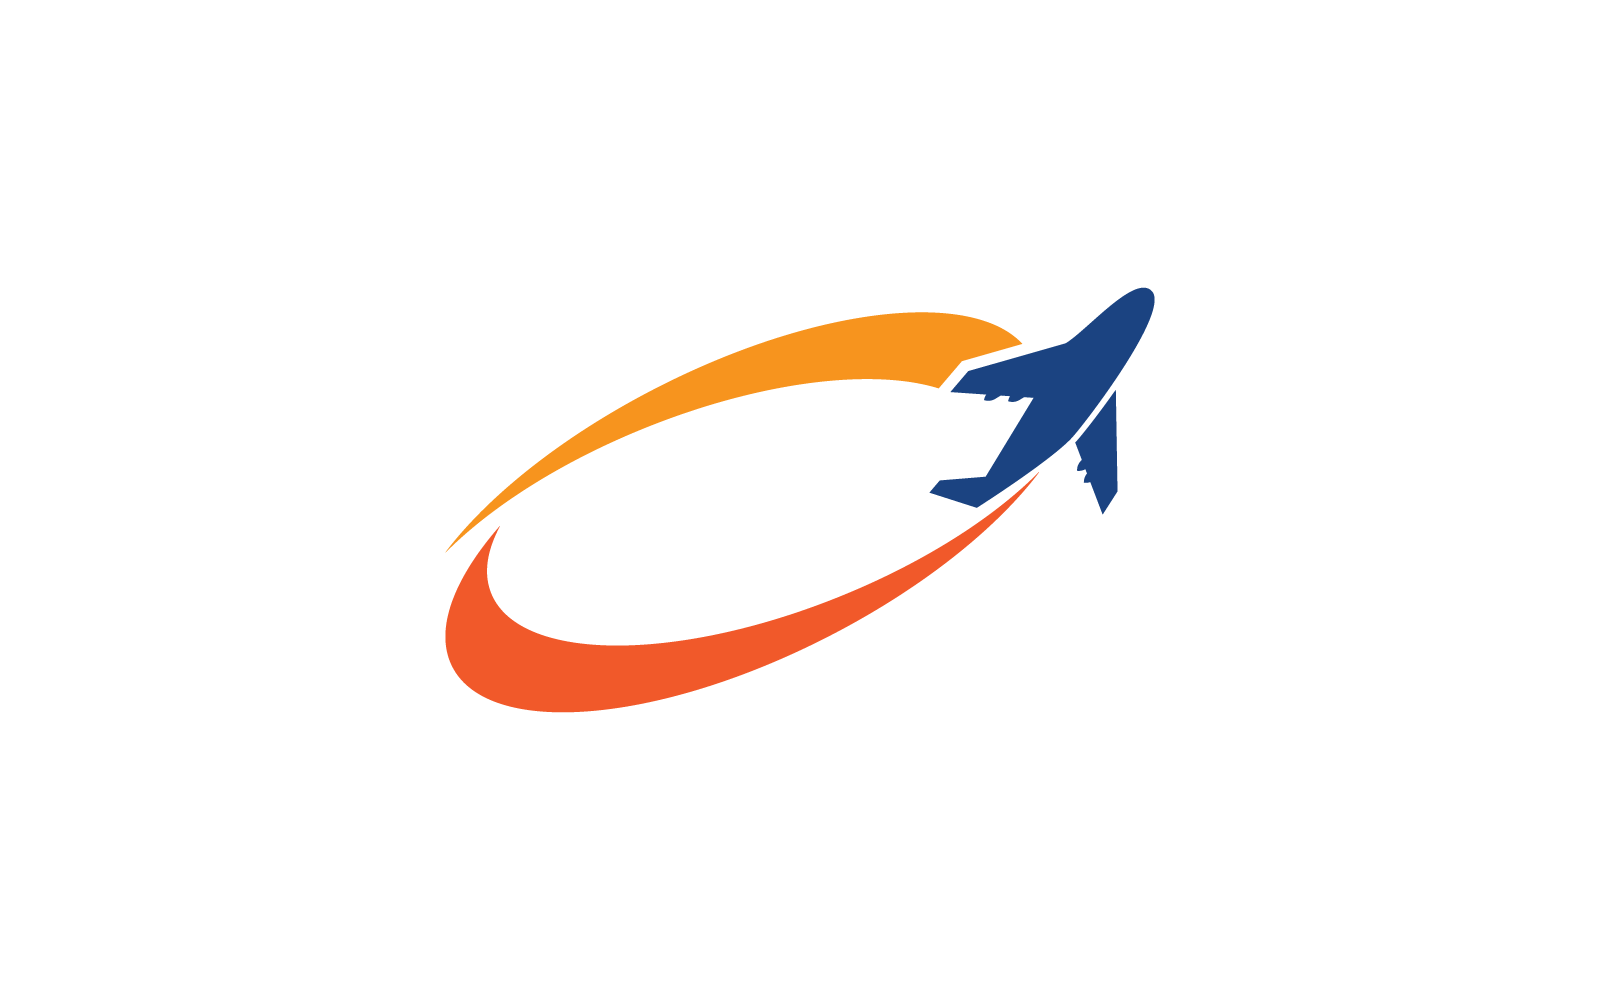 Illustration of Air Plane logo vector flat design template